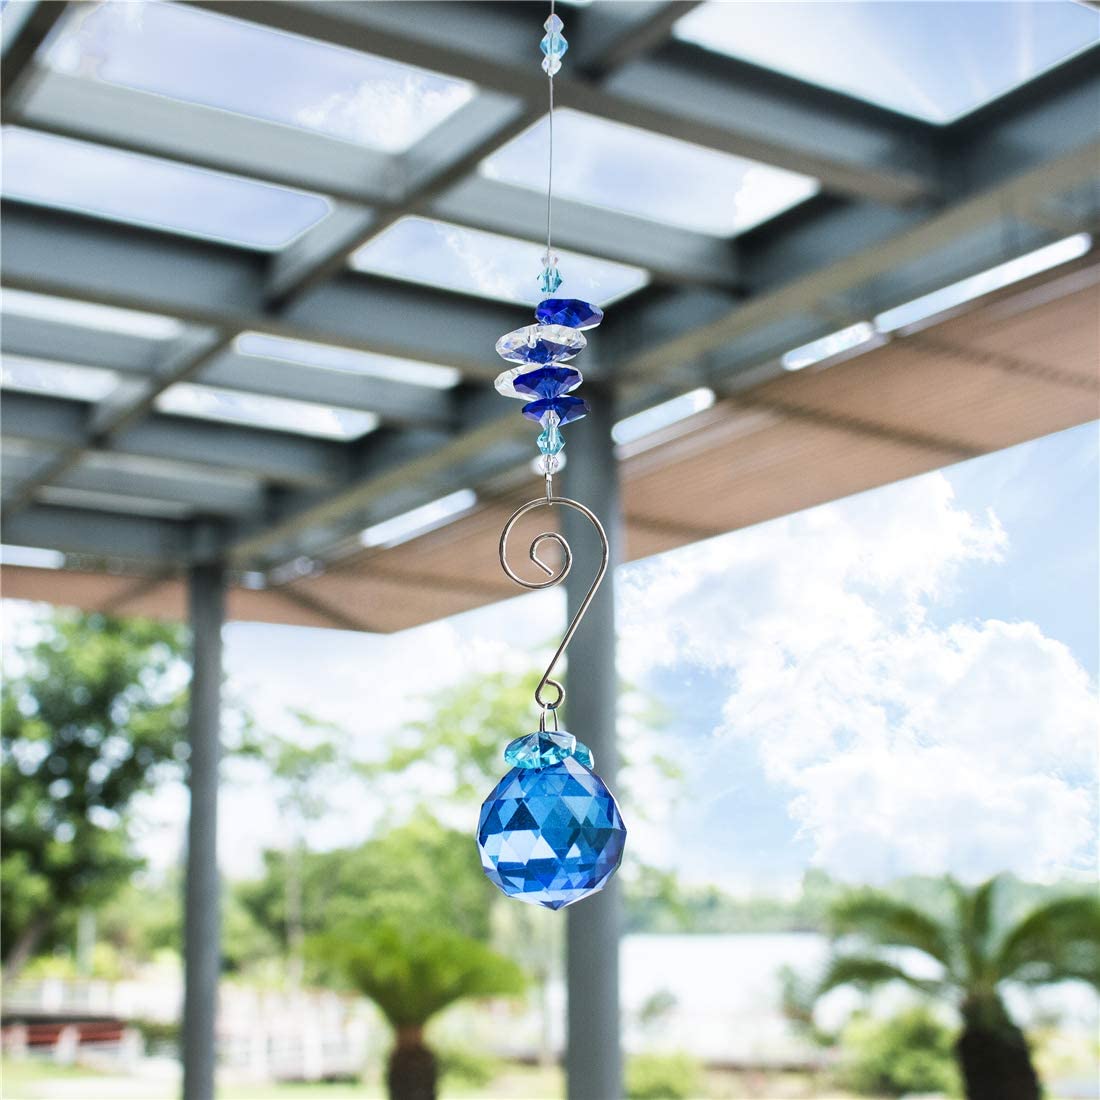 30mm Crystal Ball Chandelier Prism Ornaments Hanging Suncatcher